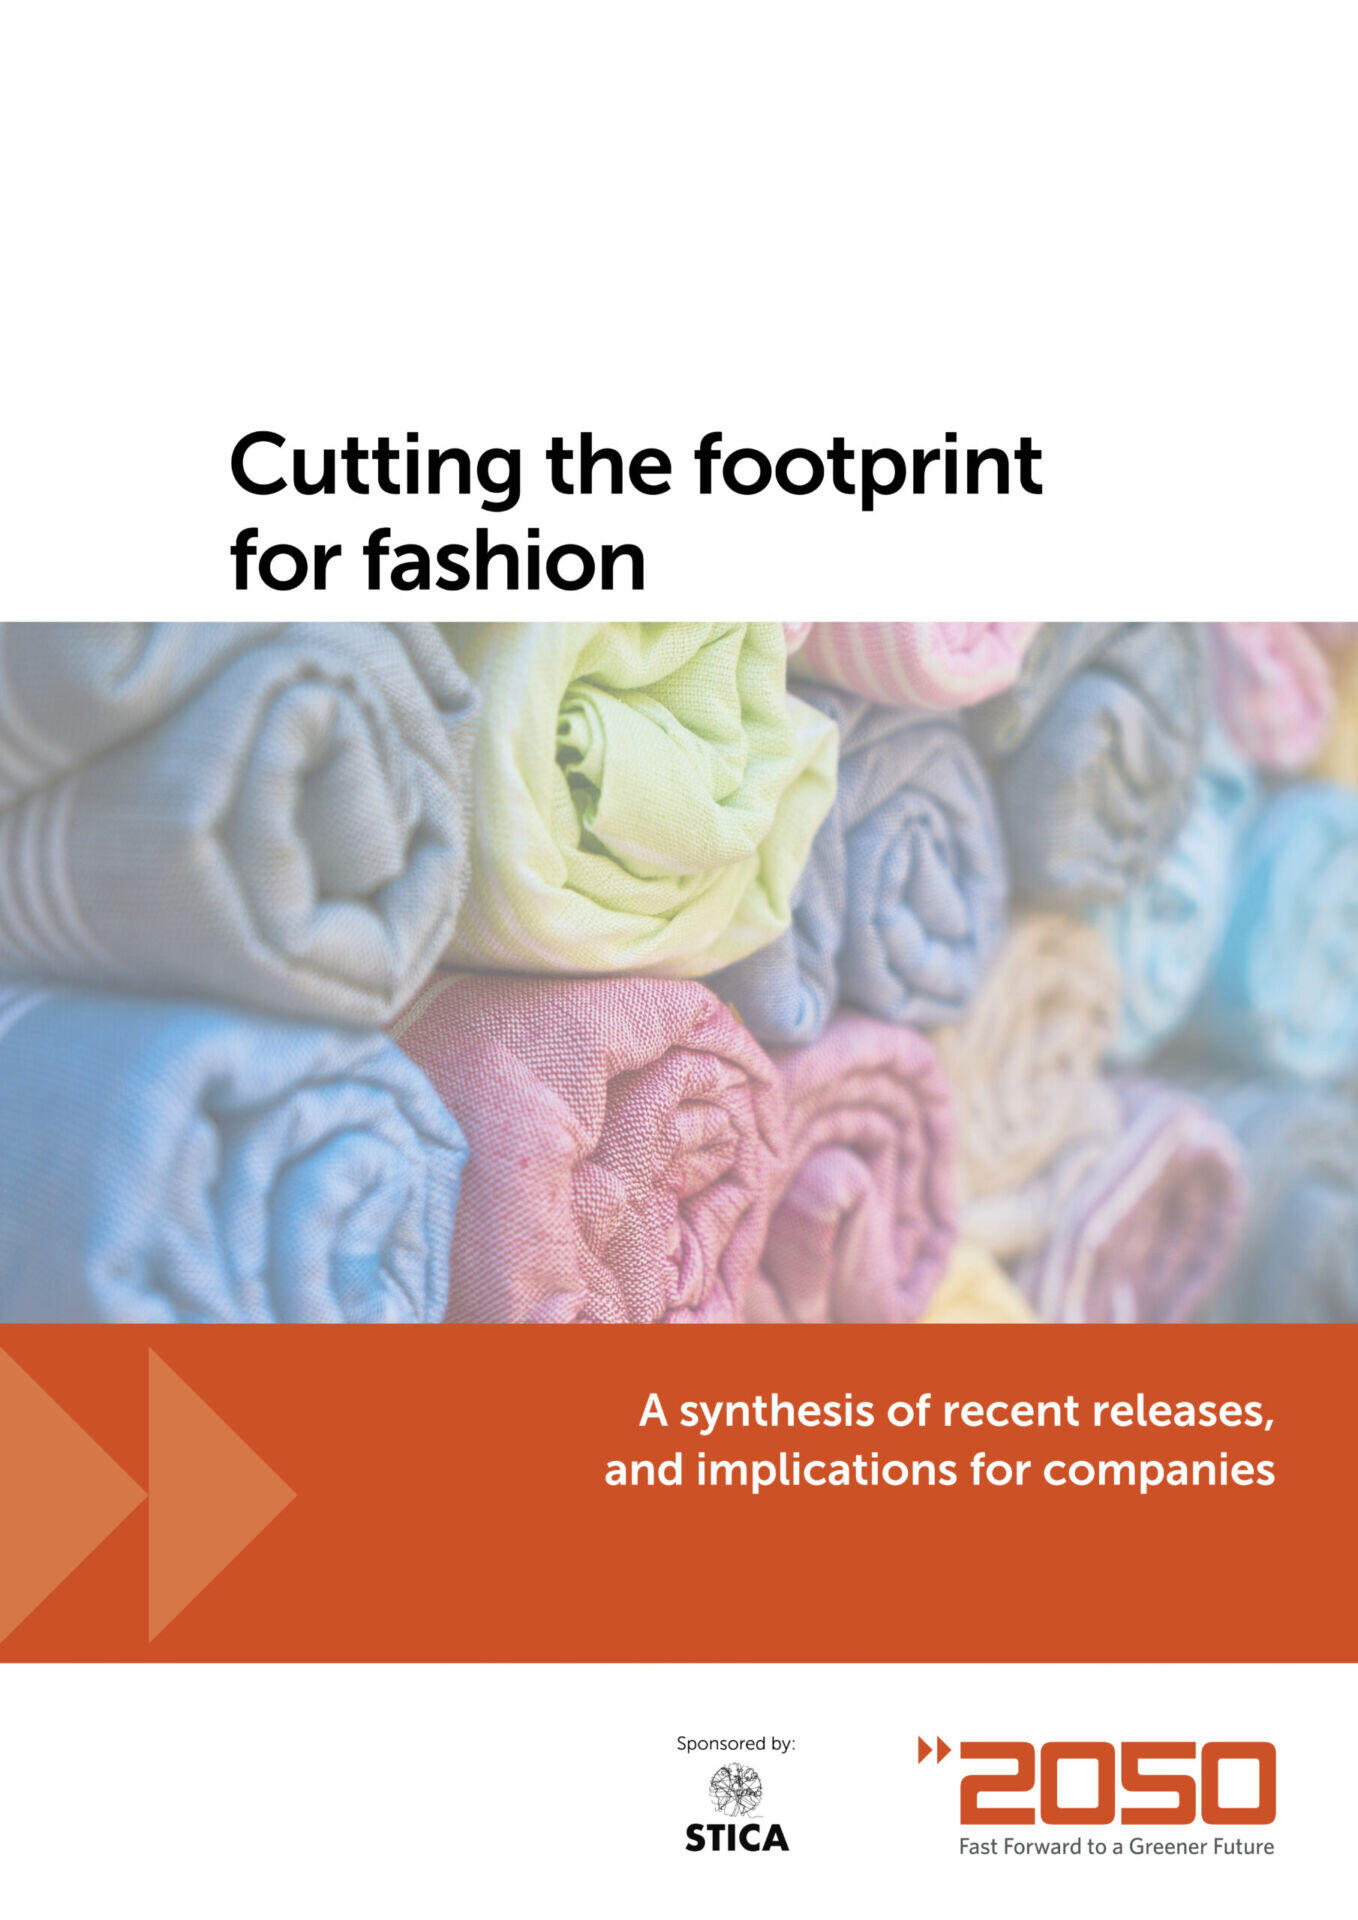 Cutting the footprint of fashion